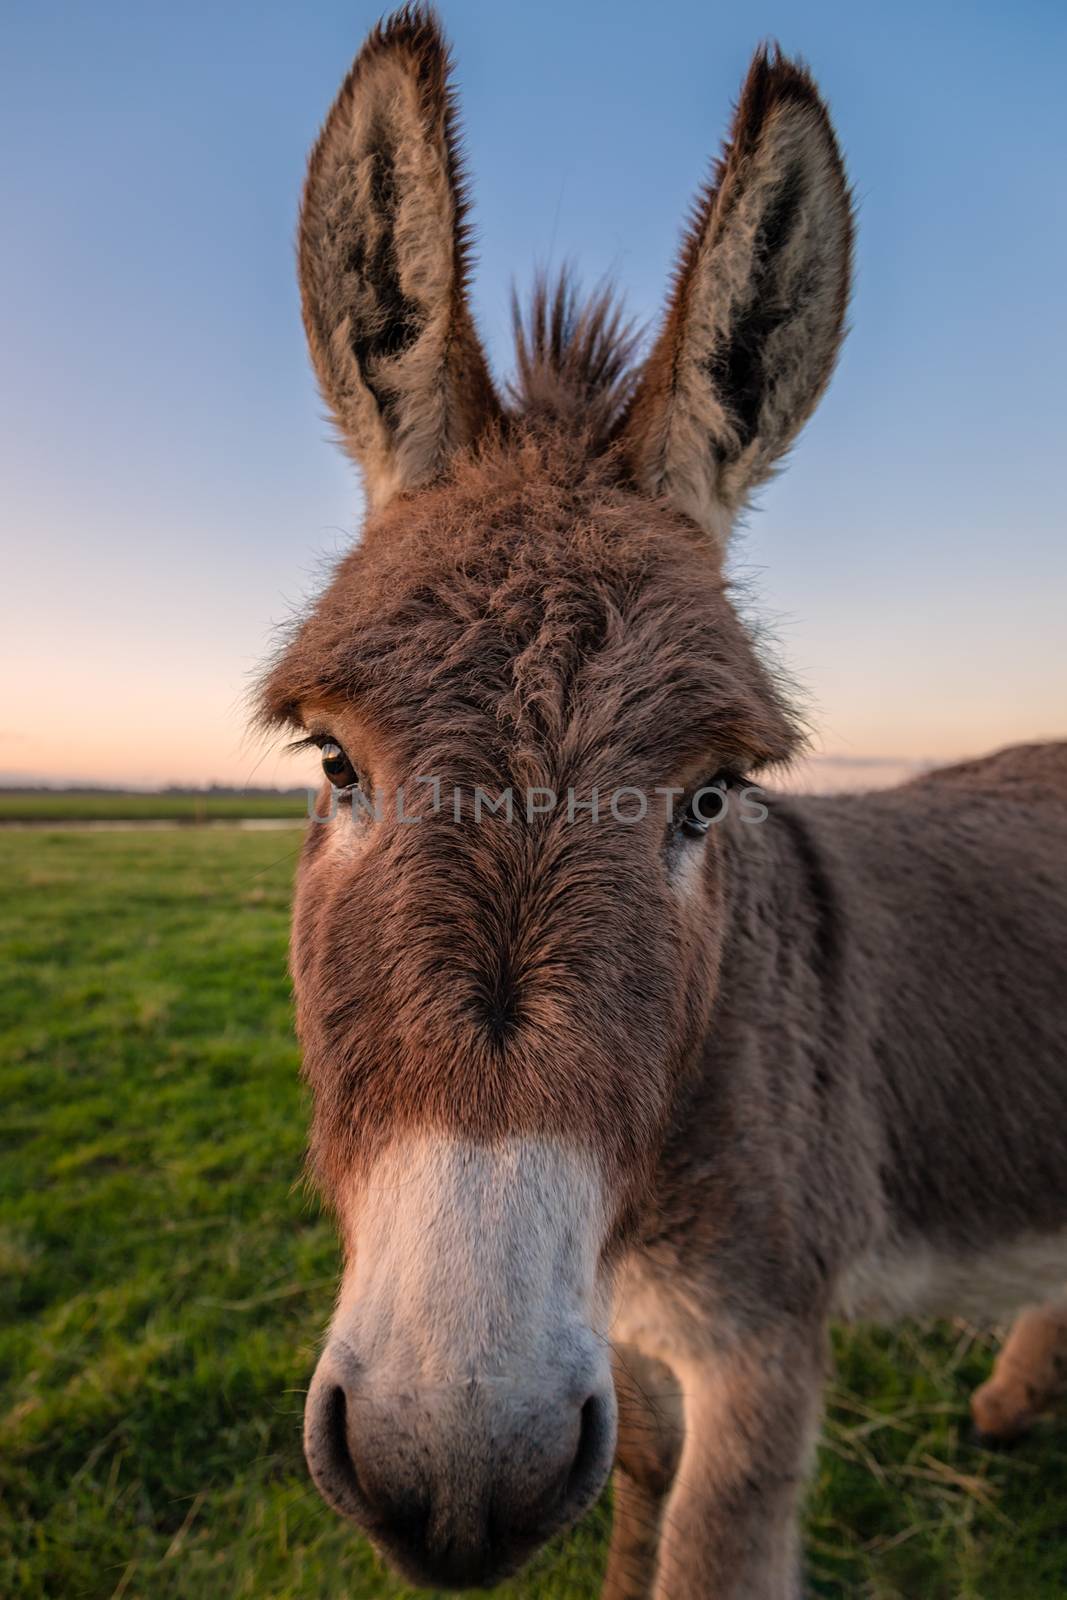 A Color Donkey Portrait at Sunset, California, USA by backyard_photography